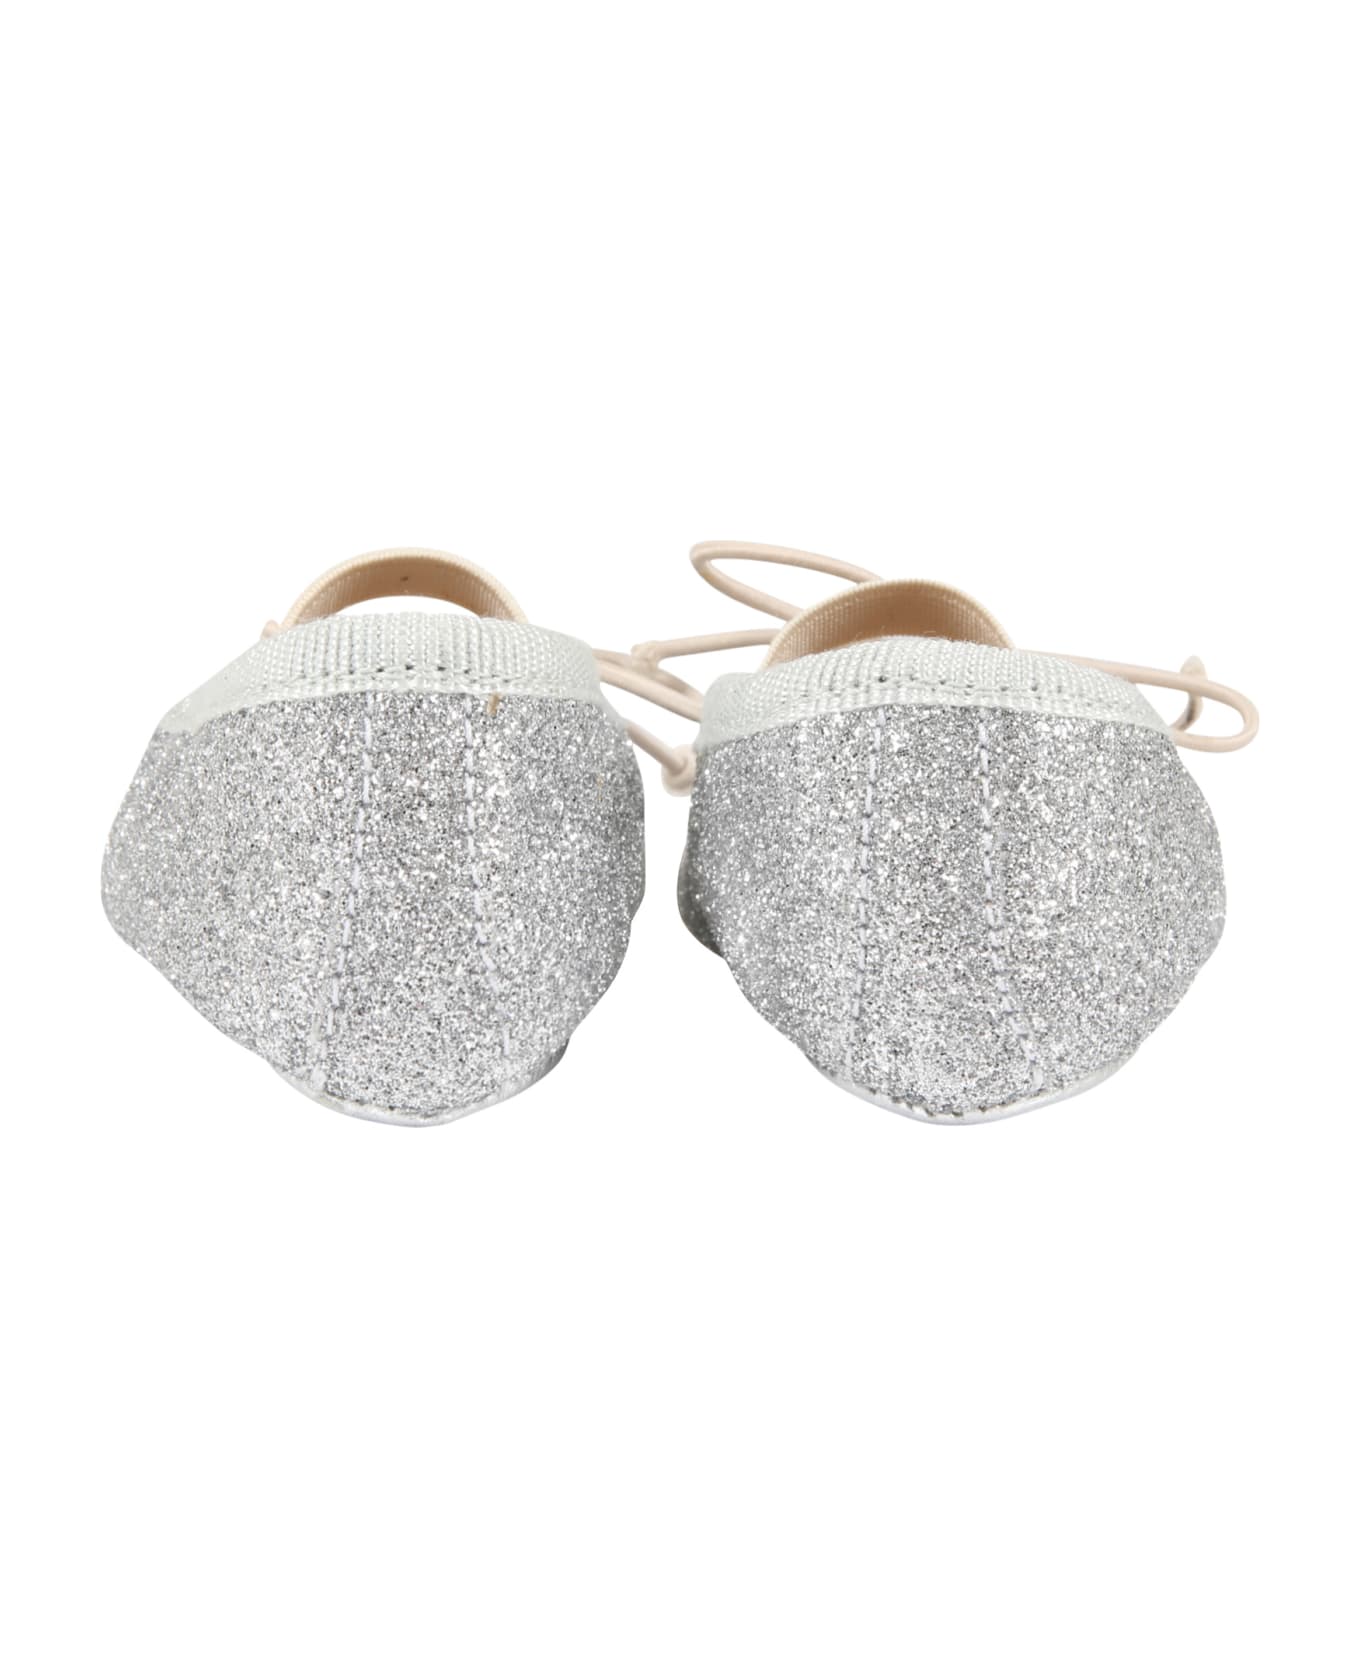 Gallucci Silver Ballet Flats For Baby Girl - Silver